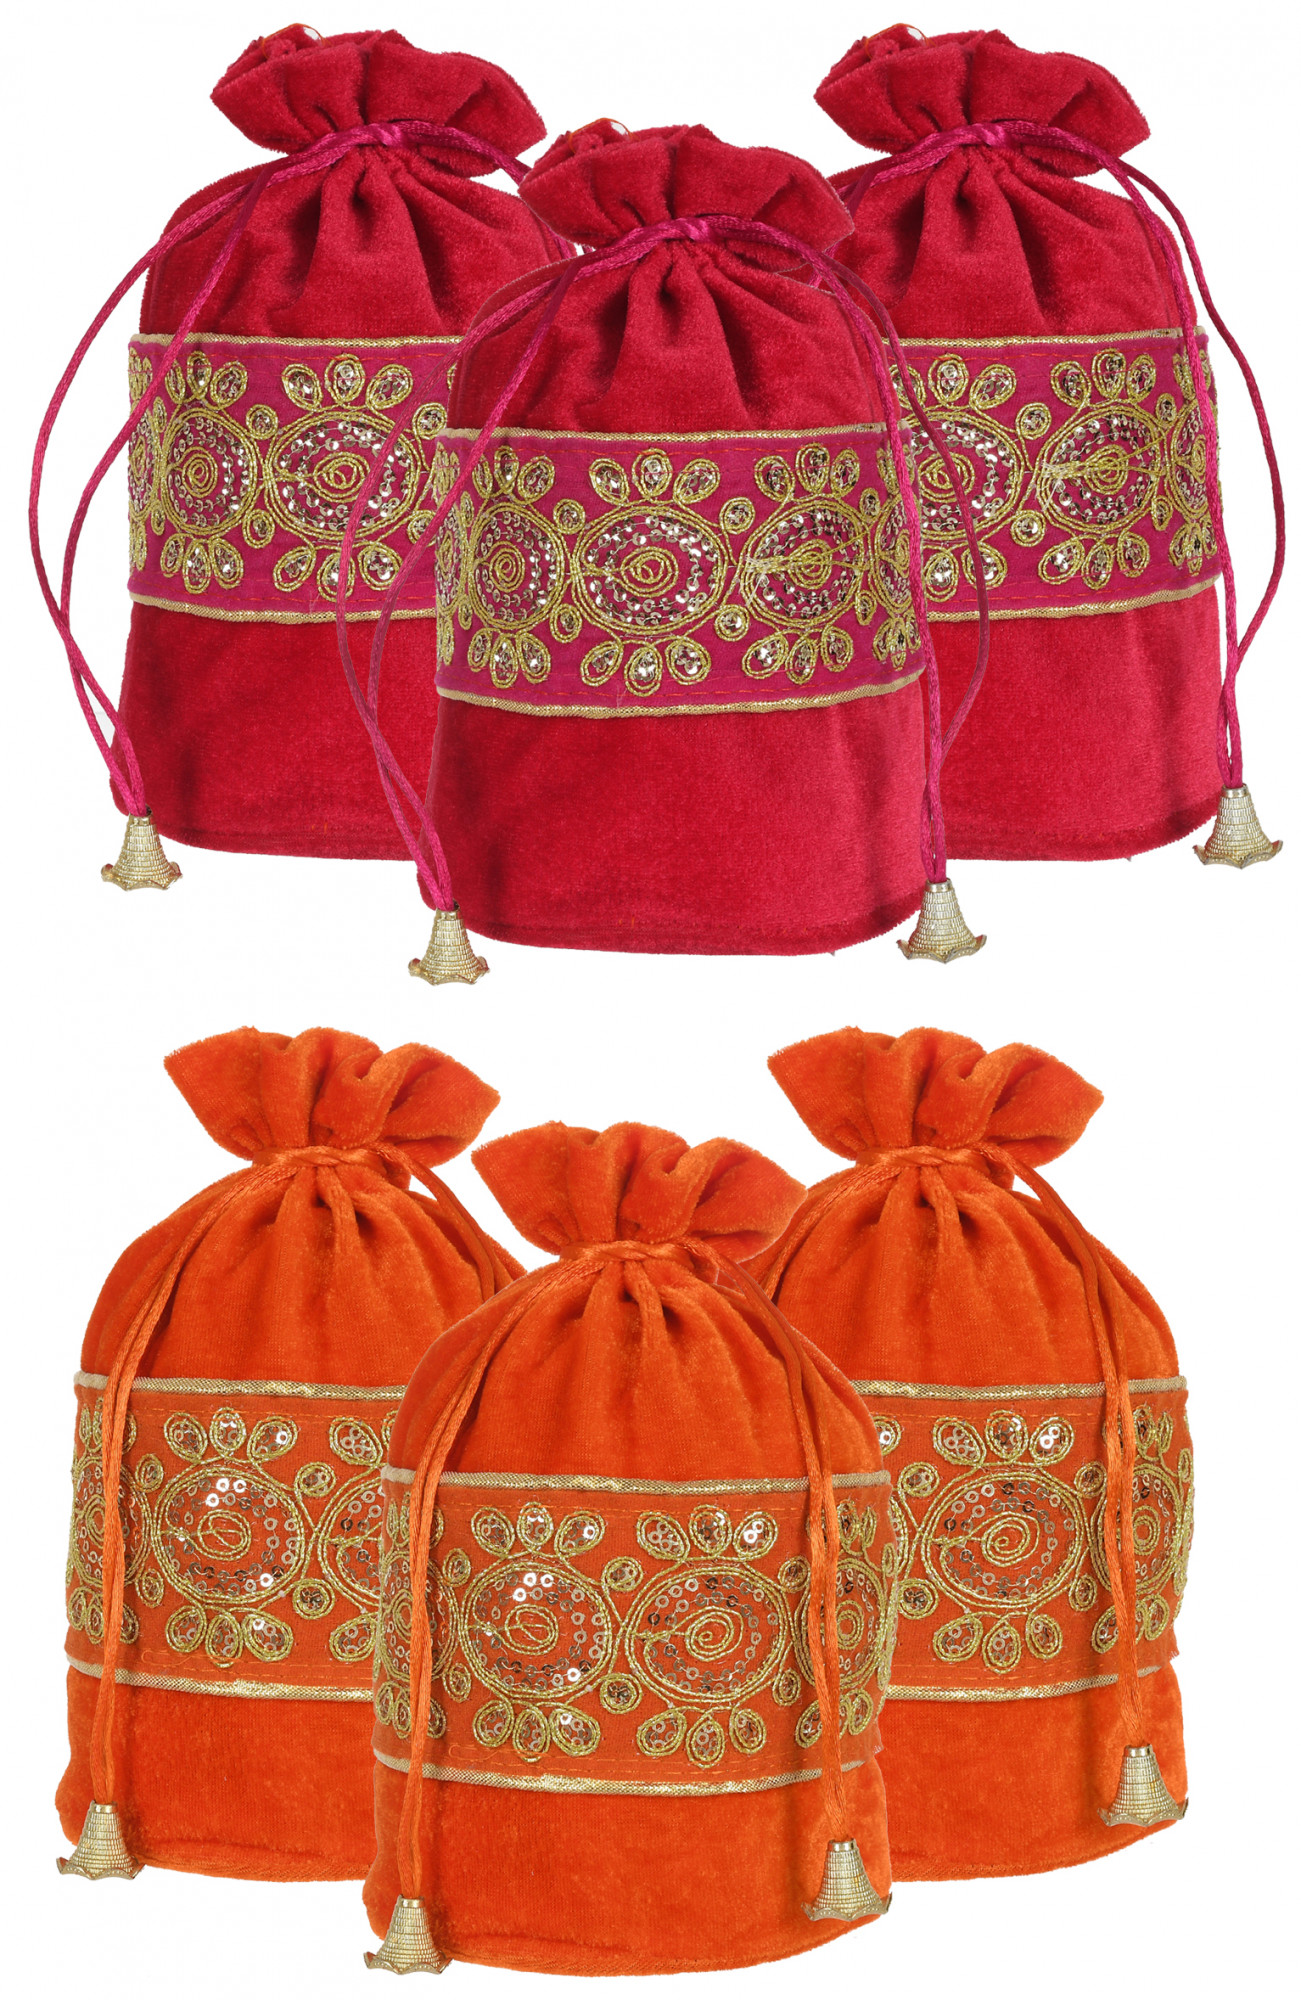 Kuber Industries Embroidered Design Drawstring Potli Bag Party Wedding Favor Gift Jewelry Bags-(Pink & Orange)